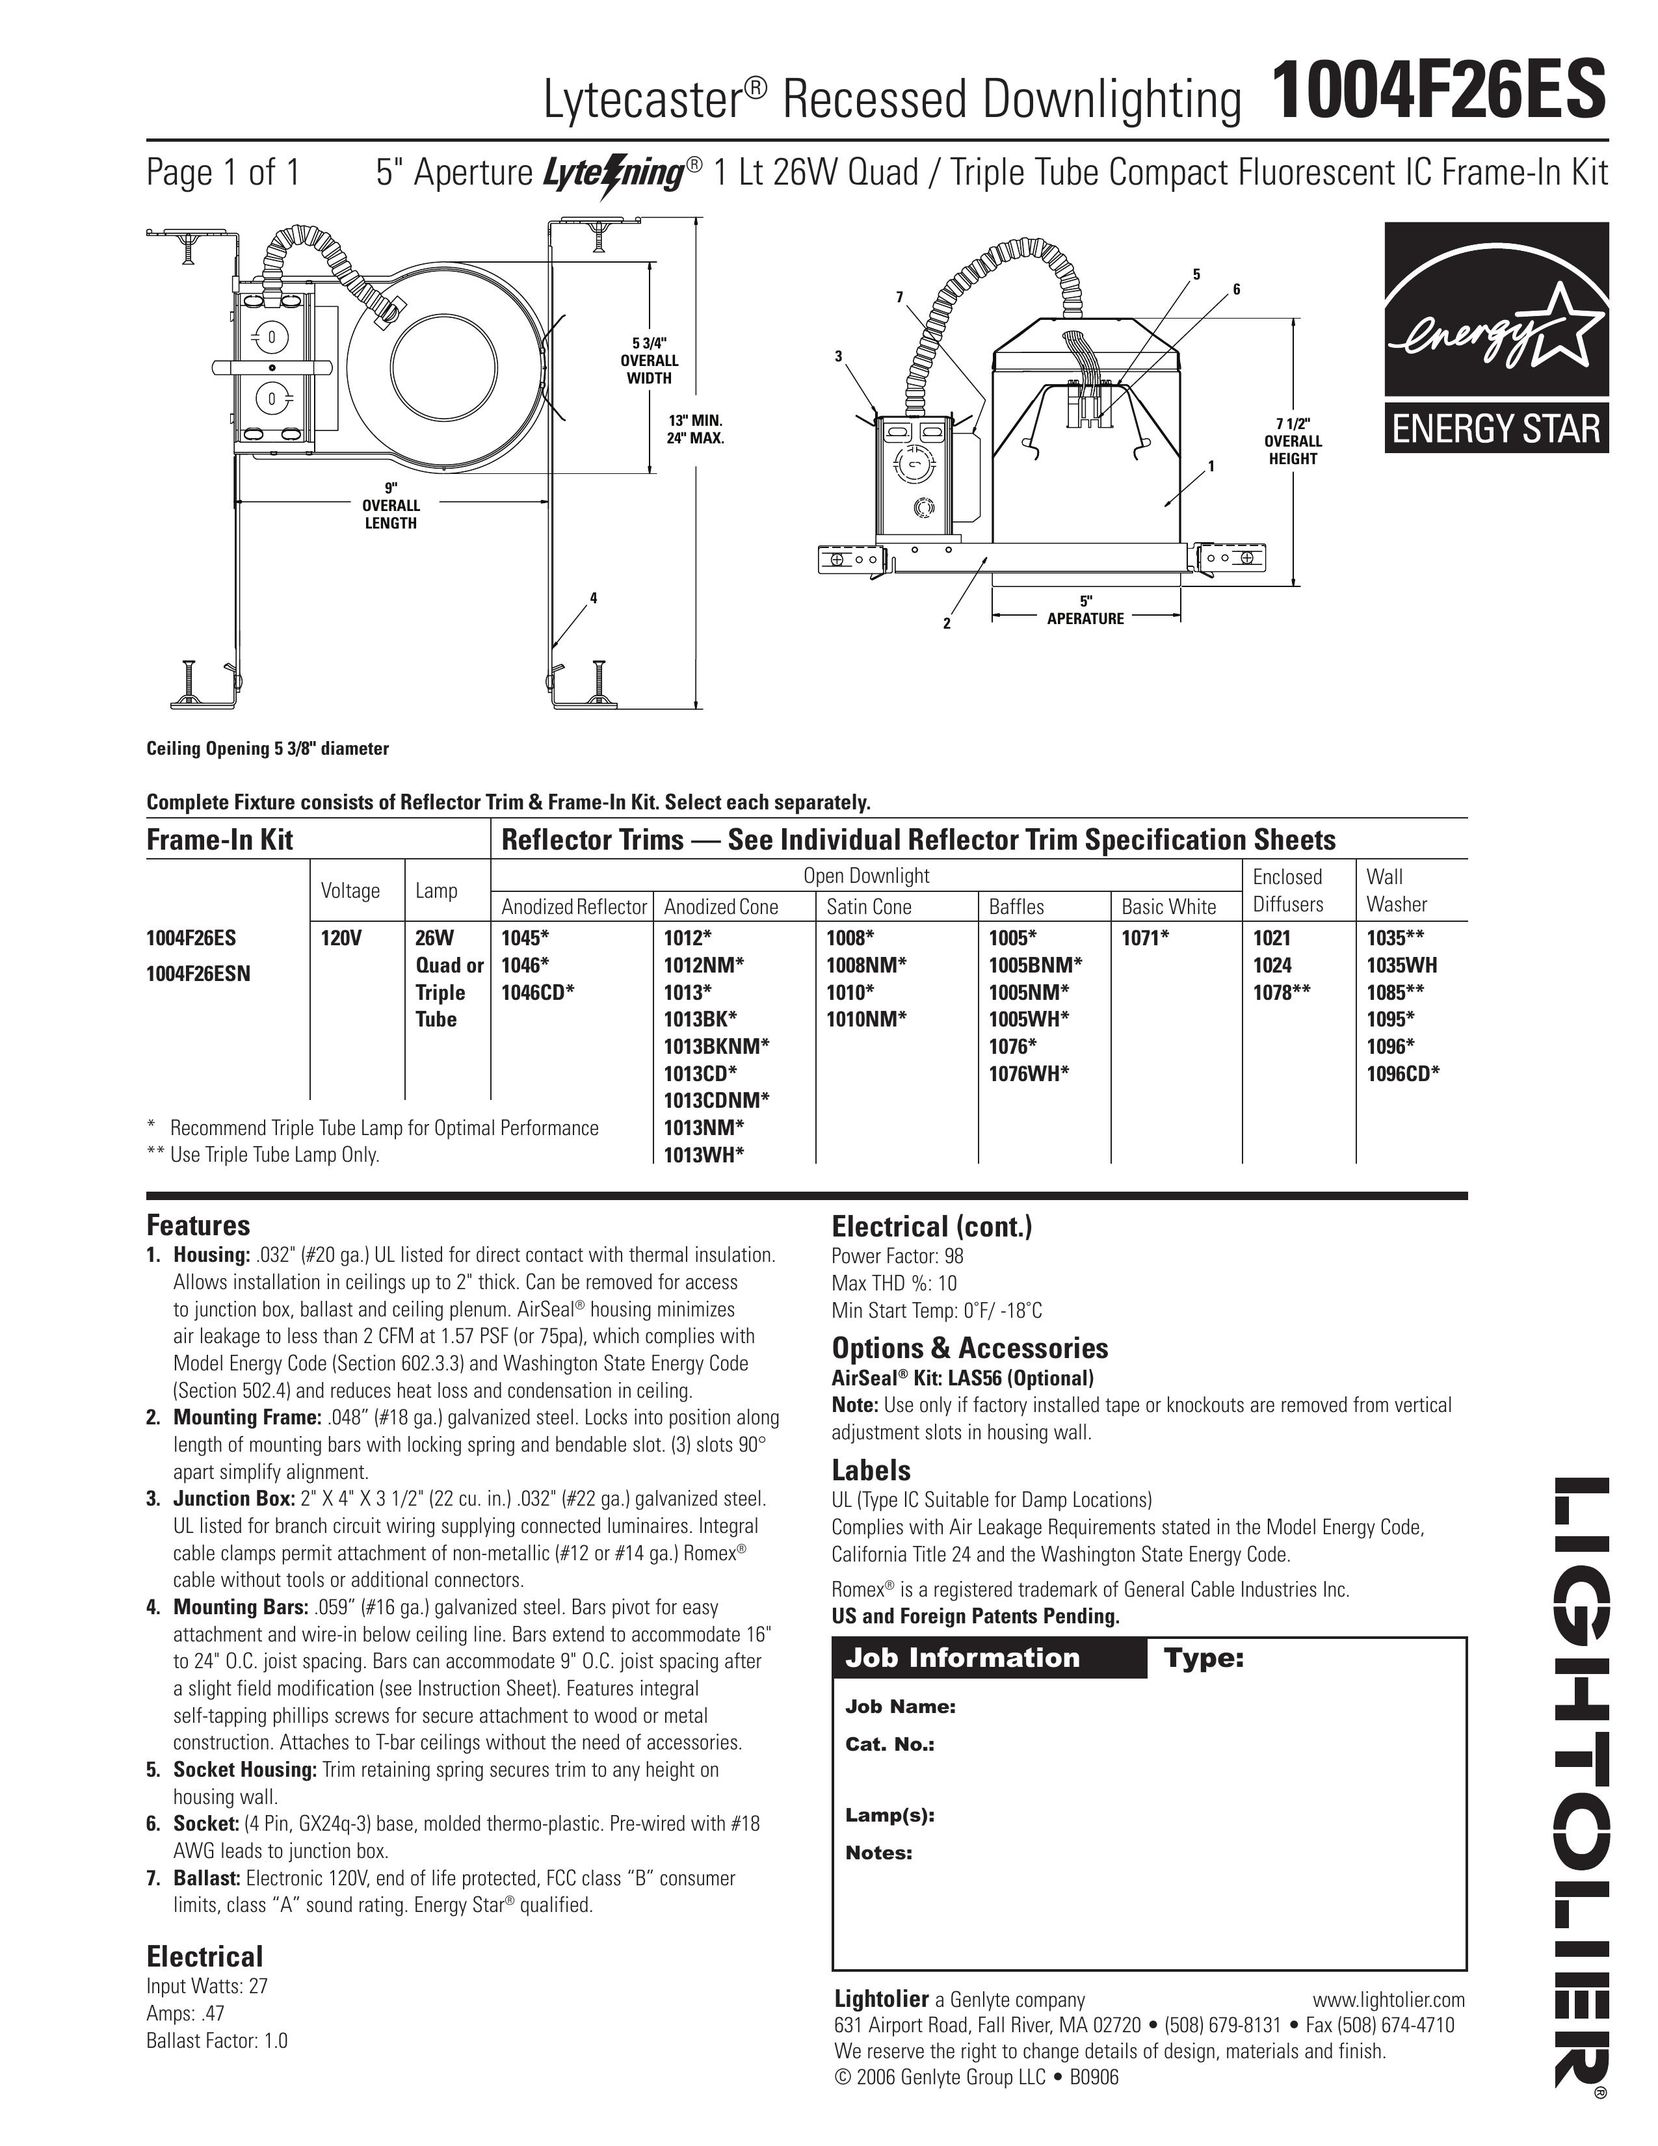 Lightolier 1004F26ES Indoor Furnishings User Manual